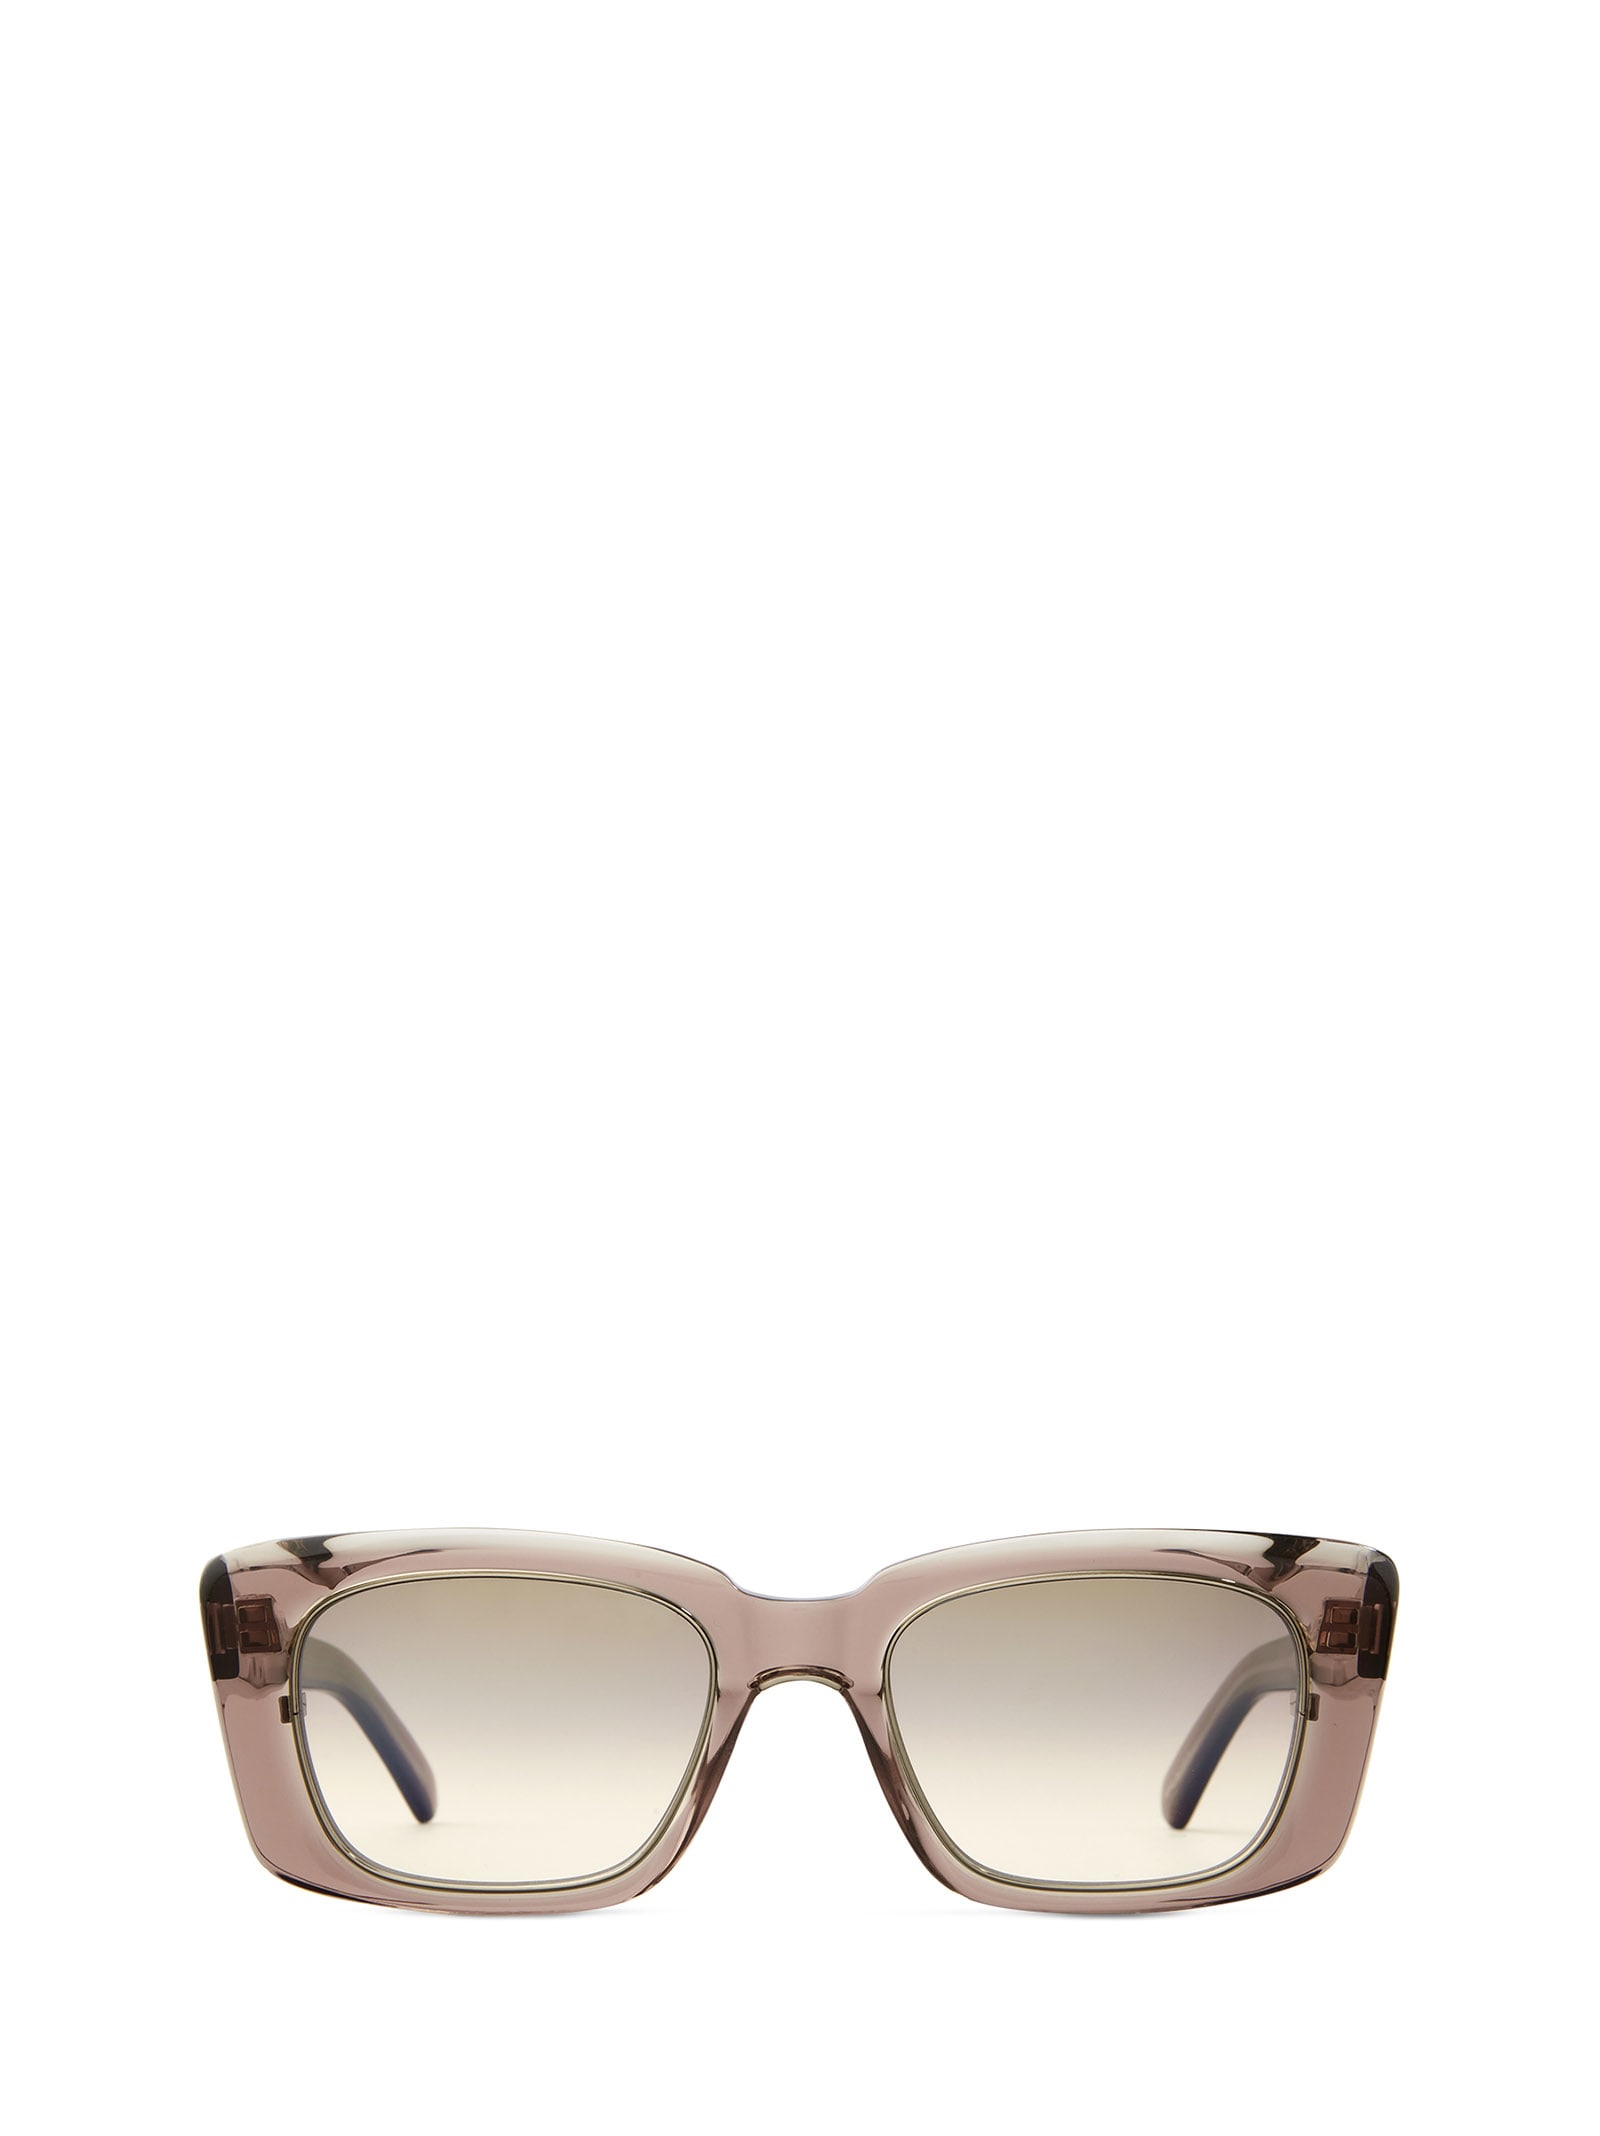 Carman S Rose Clay-12k White Gold Sunglasses